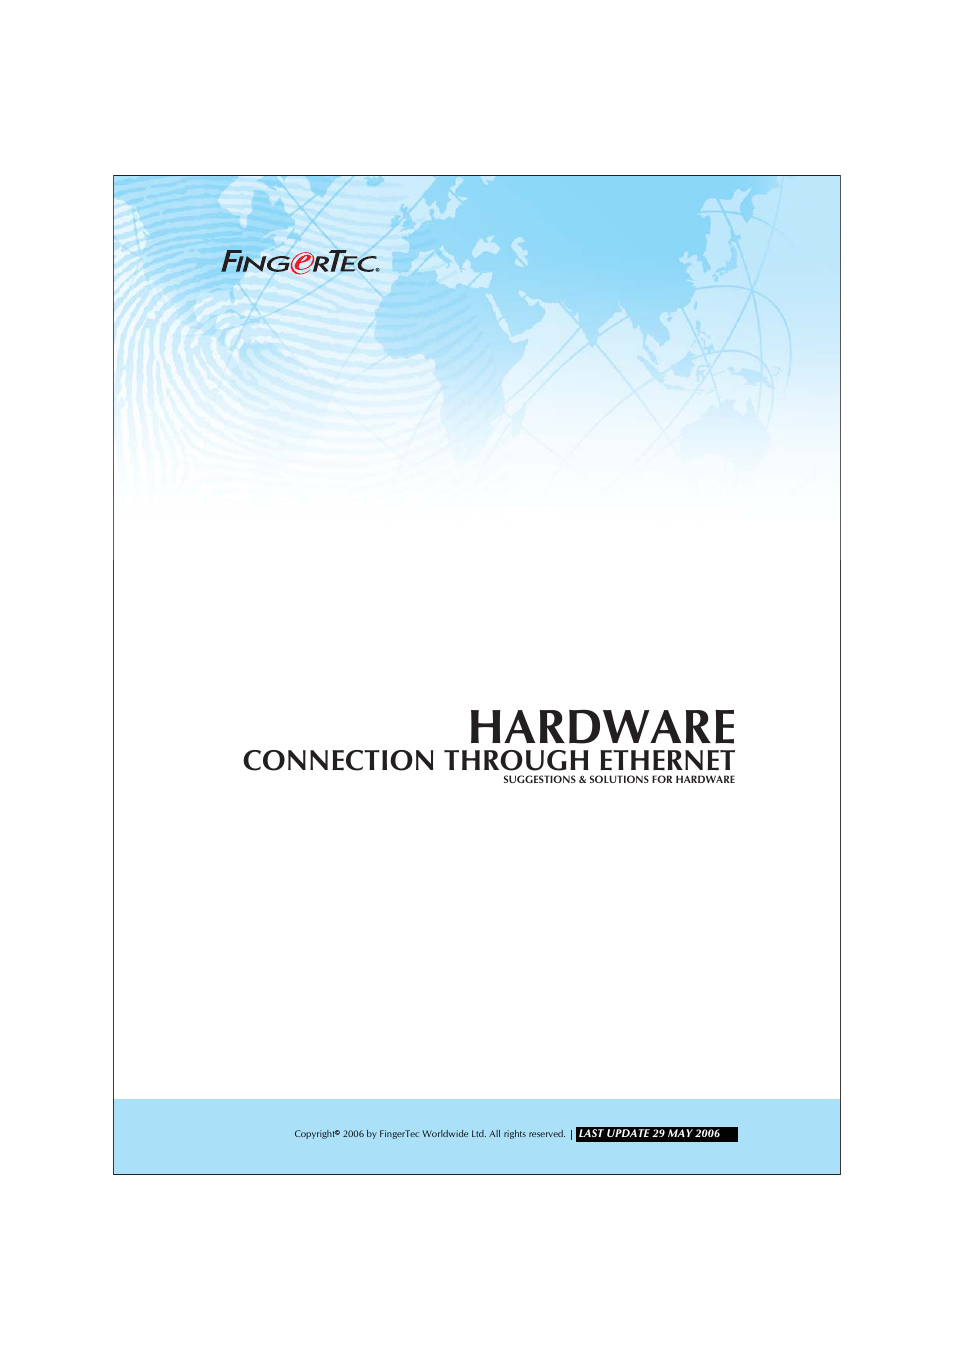 Hardware Connection through Ethernet